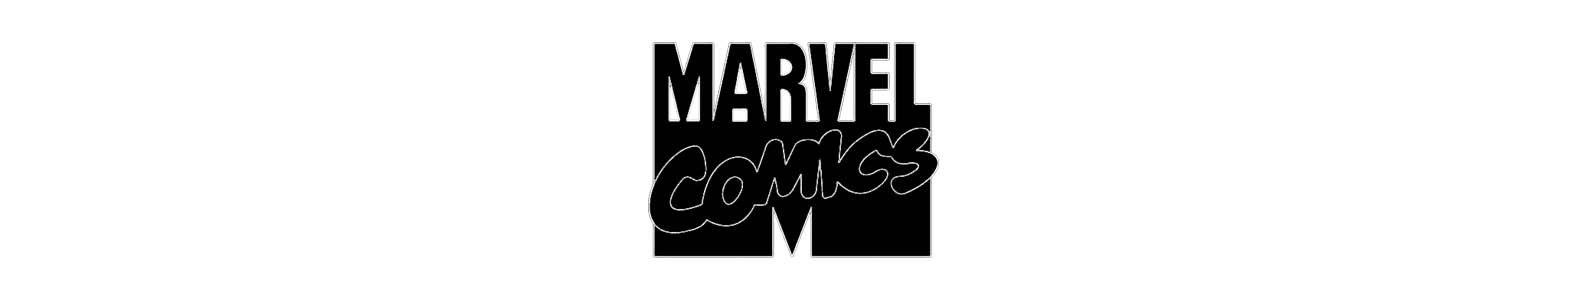 Marvel Comics brand header image